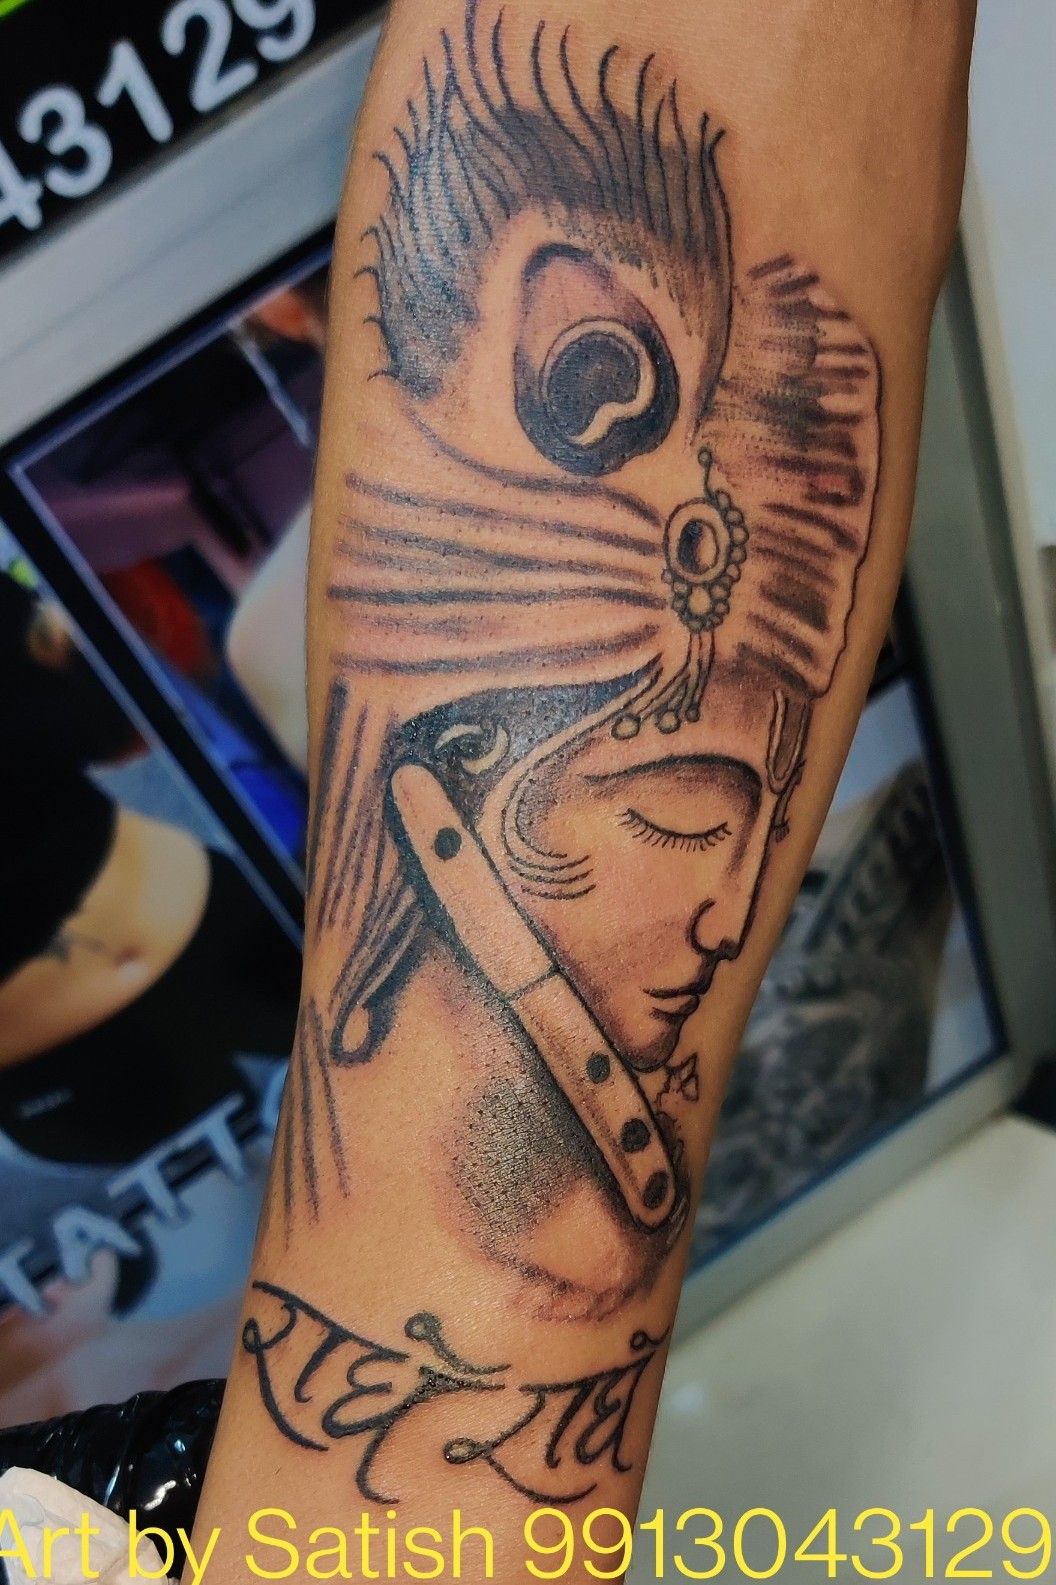 Sachin tattoos art gallery - Name. Tattoo by Sachin at Sachin Tattooz  #sachintattooz #tattoos #angel #name #art #birdsofinstagram #tattooartist  #tattoosofig #satish #birdstattoo #artistsoninstagram #tattooartist #artist  #proartist #believatattoo ...